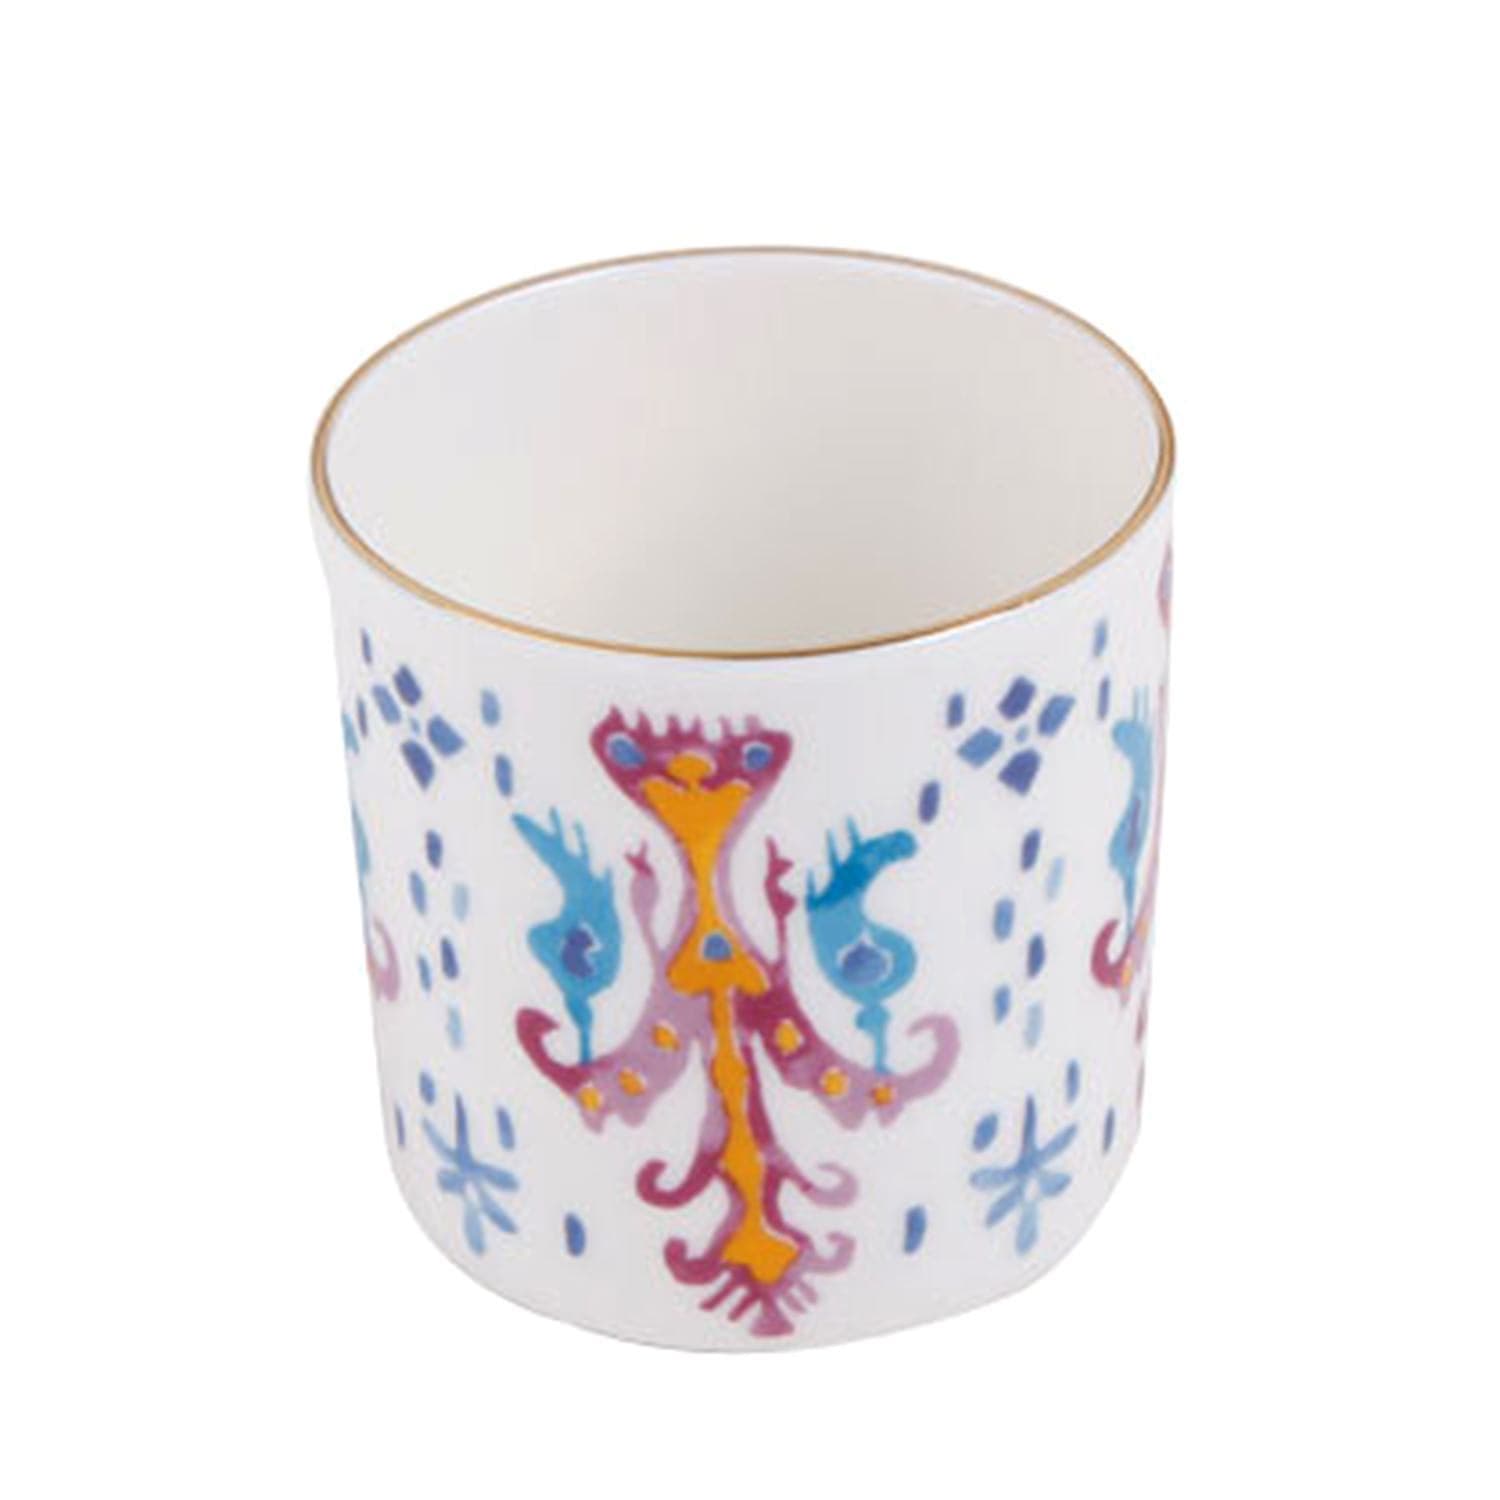 Porland Porselen Posh Design 1 Mug without Handle - Multicolour - 04ALM003603 - Jashanmal Home